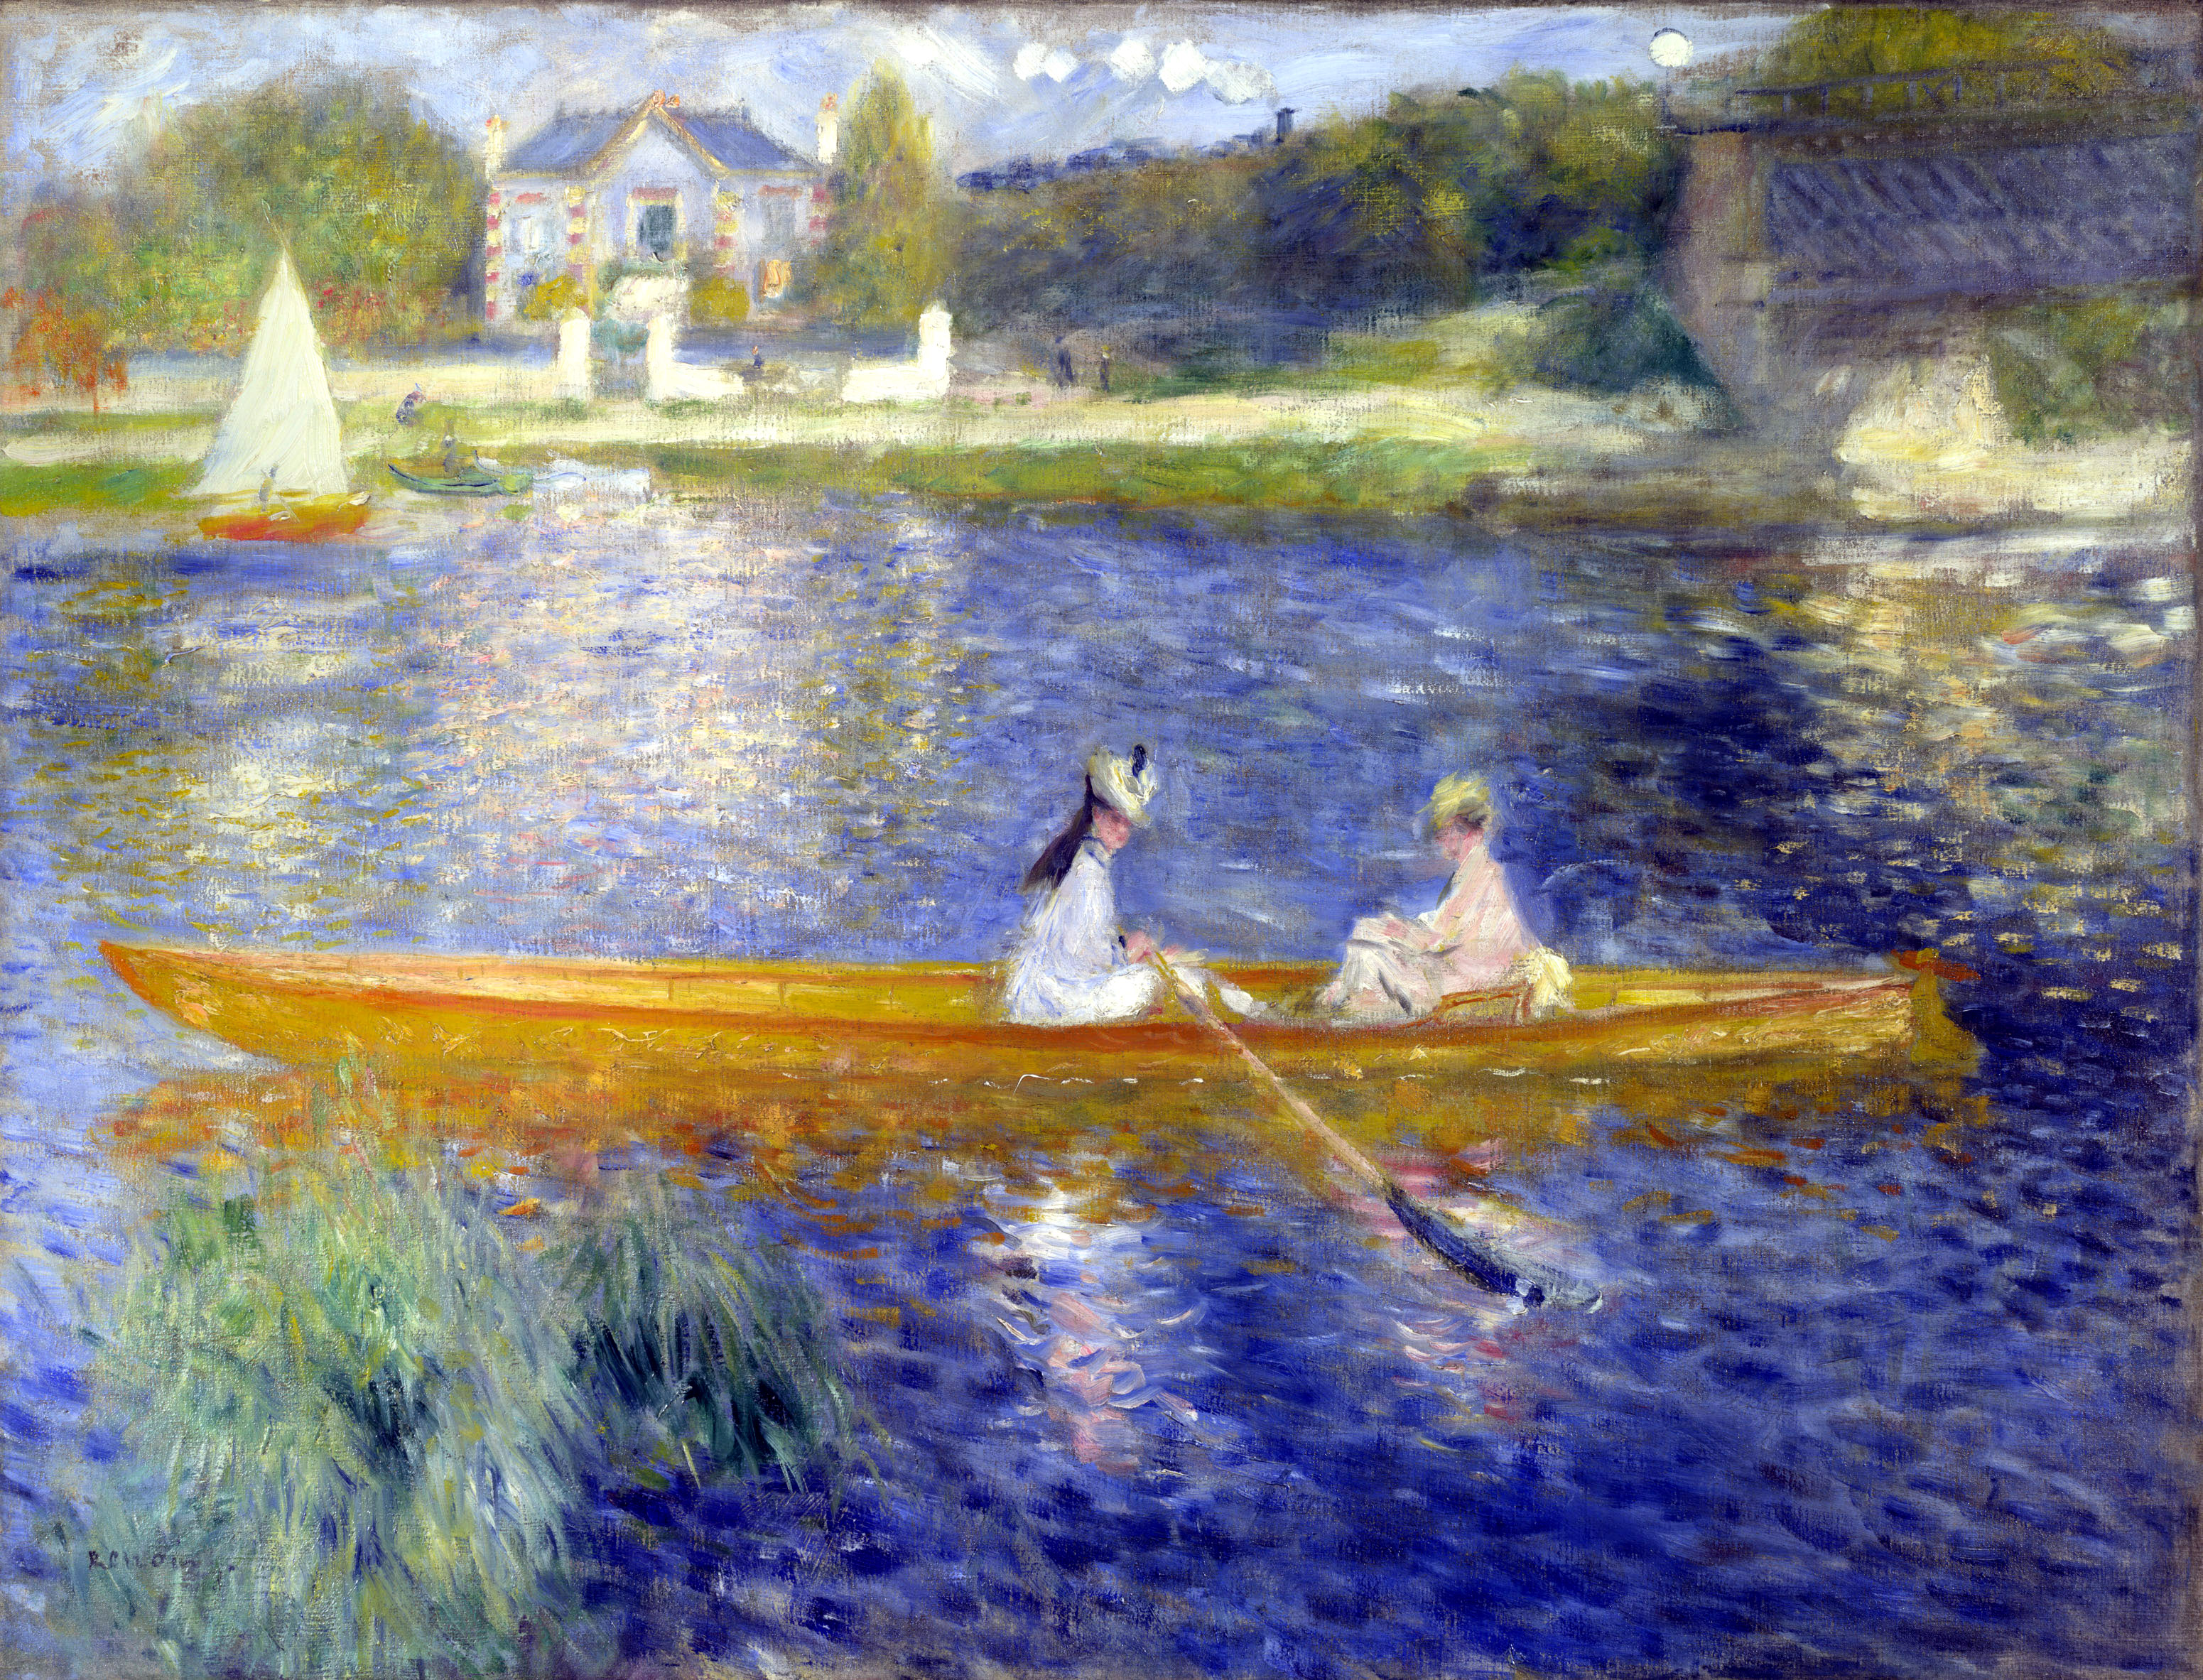 Łódka by Pierre-Auguste Renoir - 1875 - 71 cm x 92 cm 